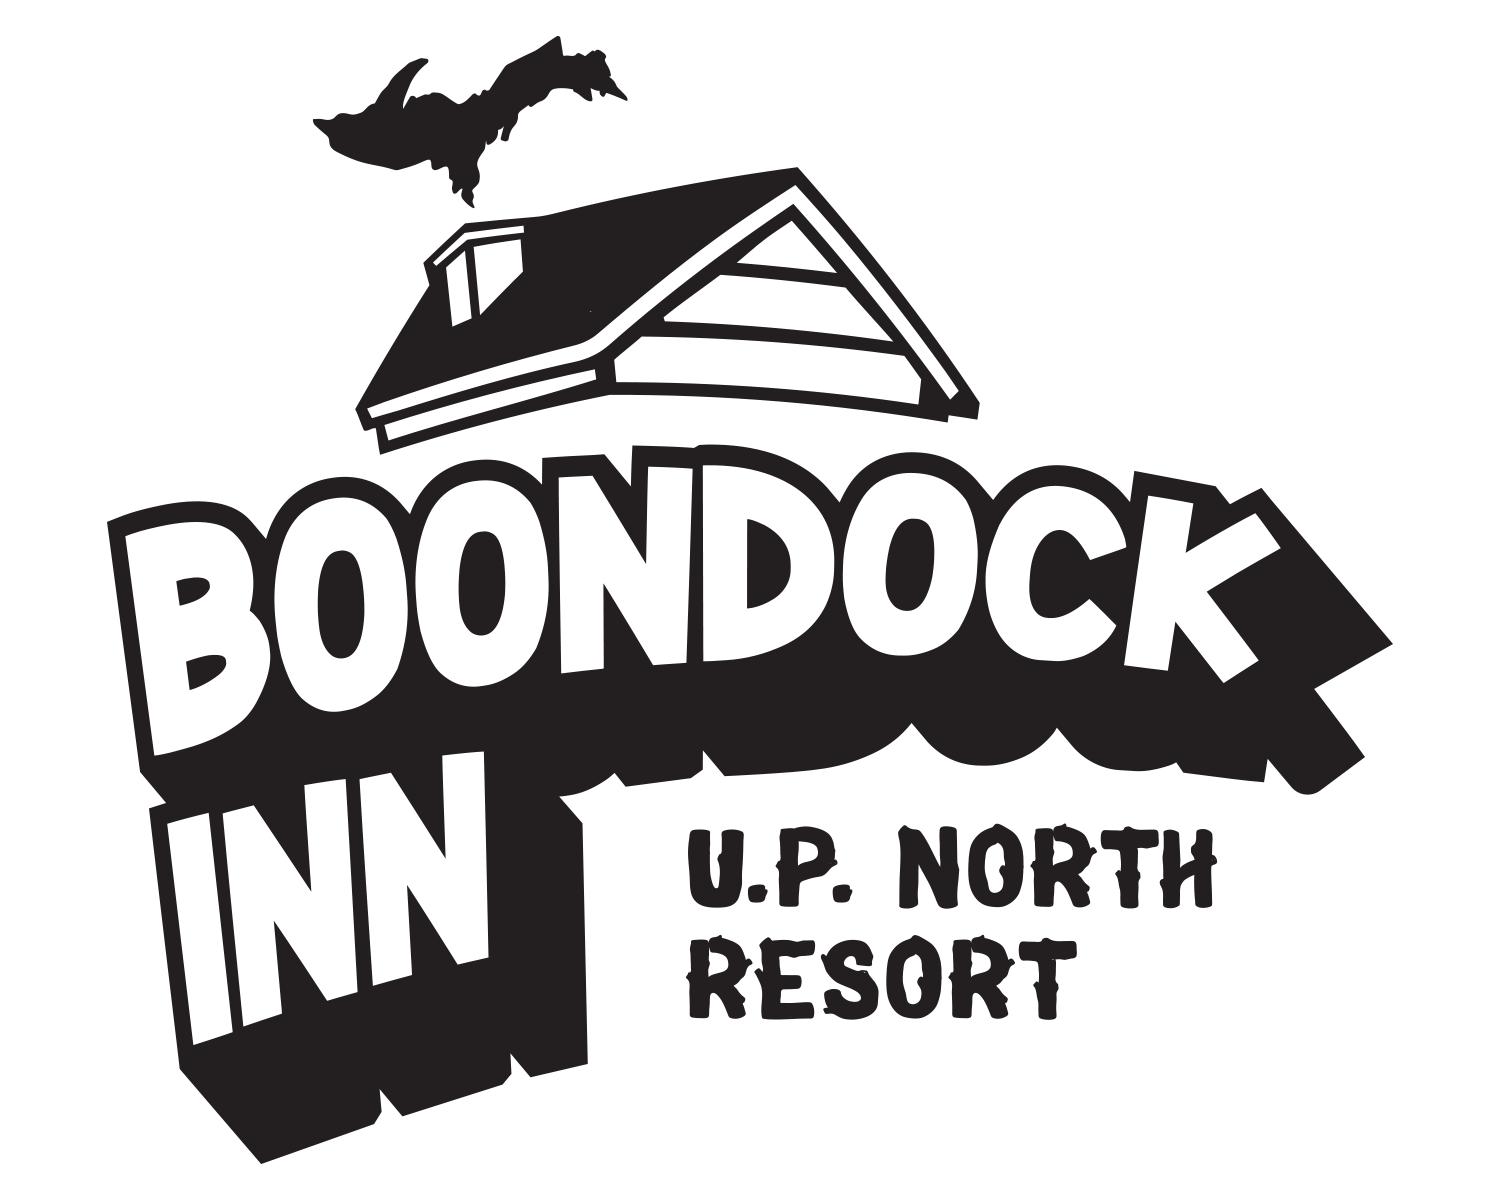 Boondock Inn U.P. North Resort